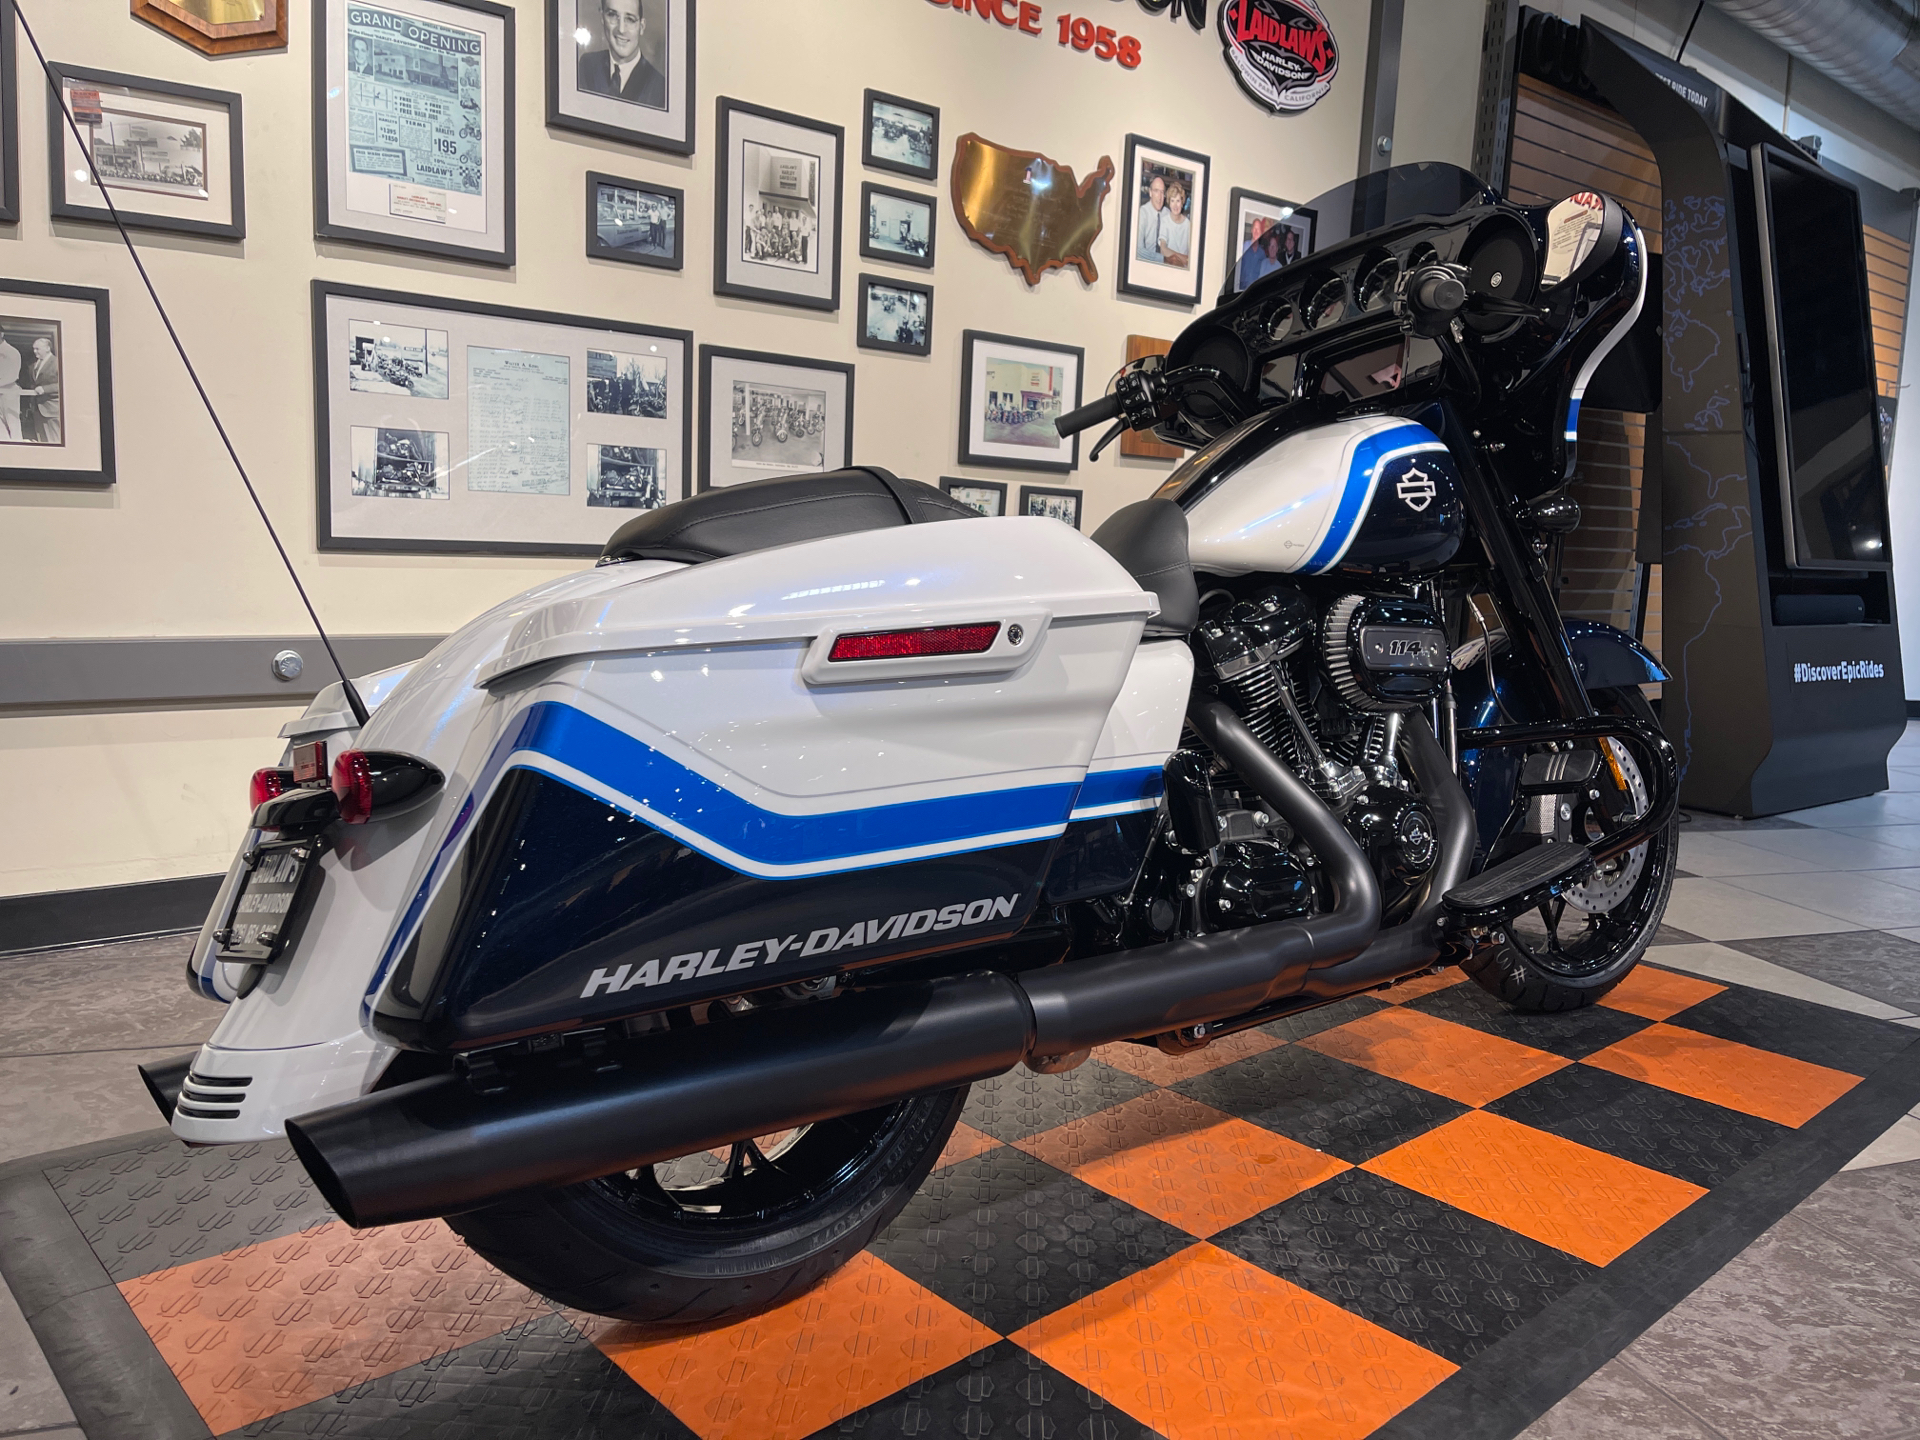 New 2021 Harley Davidson Street Glide Special Arctic Blast Black Pearl Option Baldwin Park Ca 29471